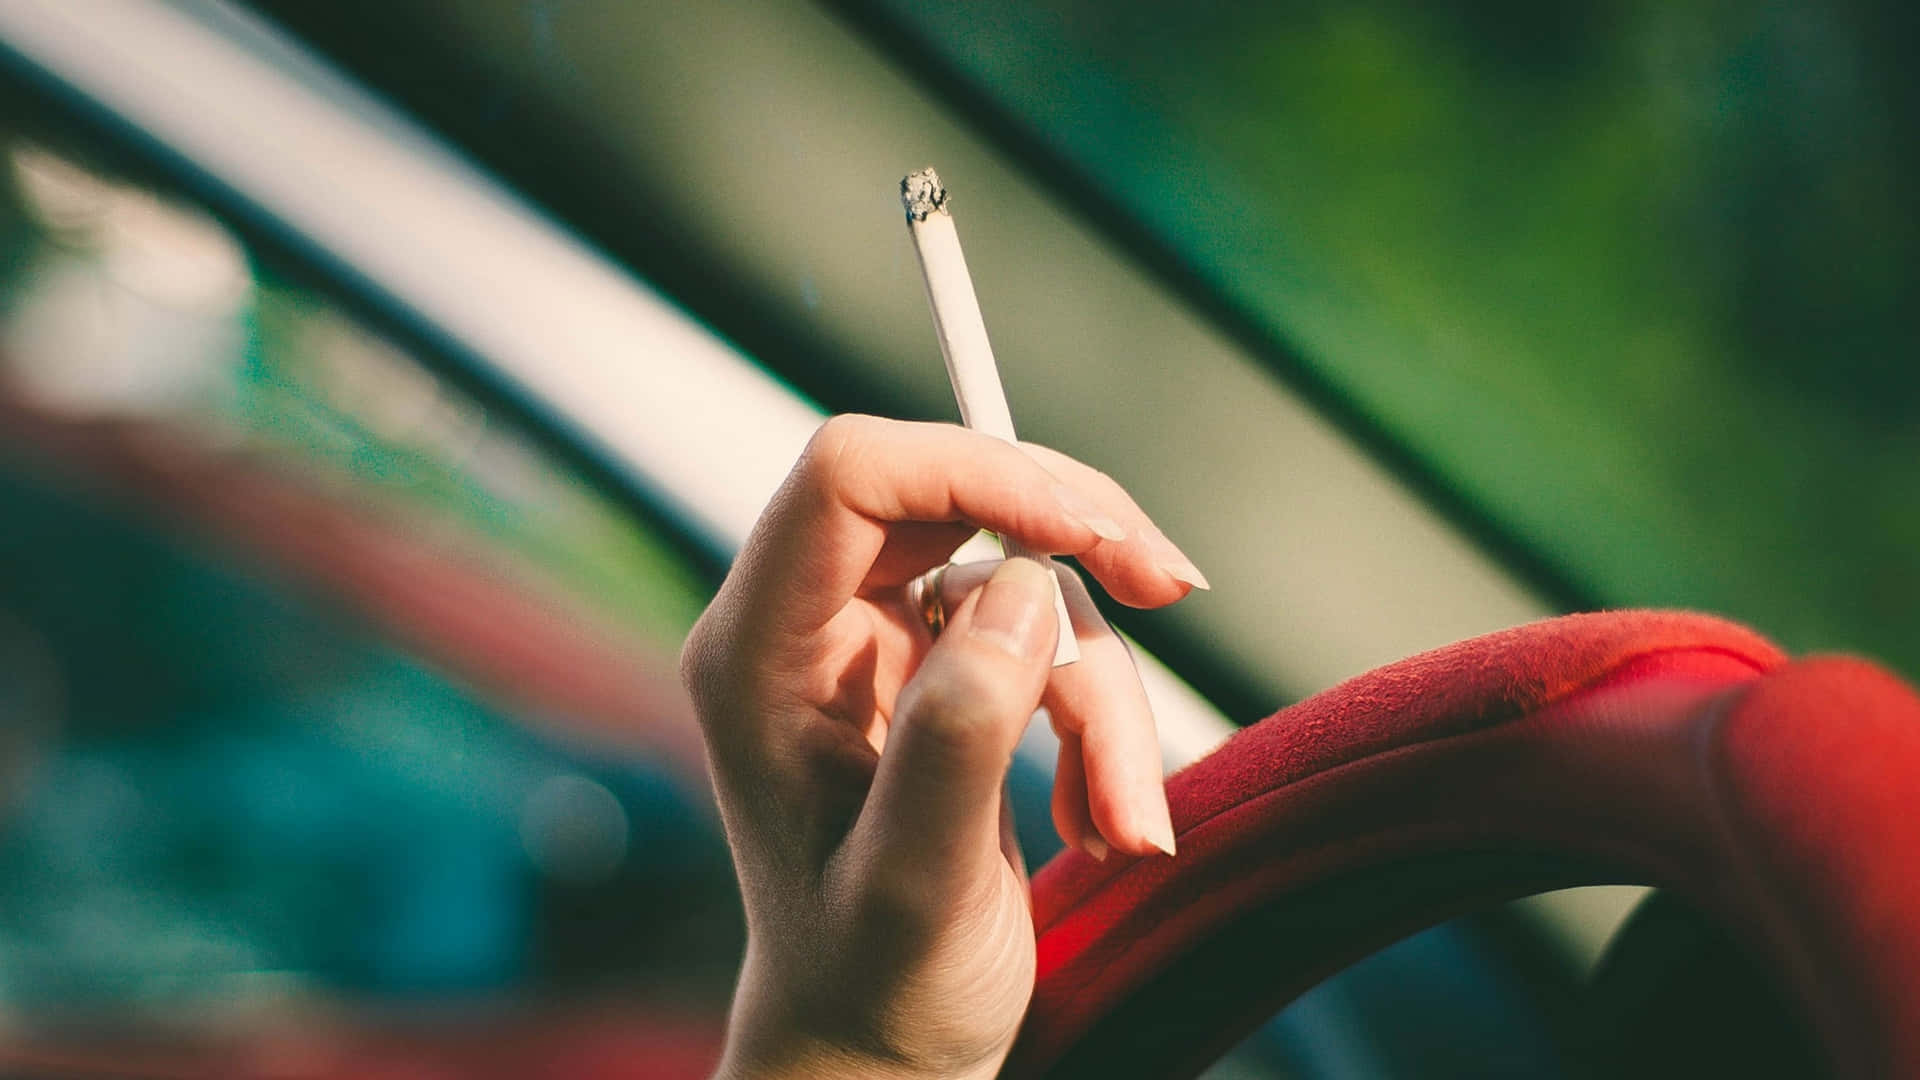 Girl Smoking In A Car Wallpaper